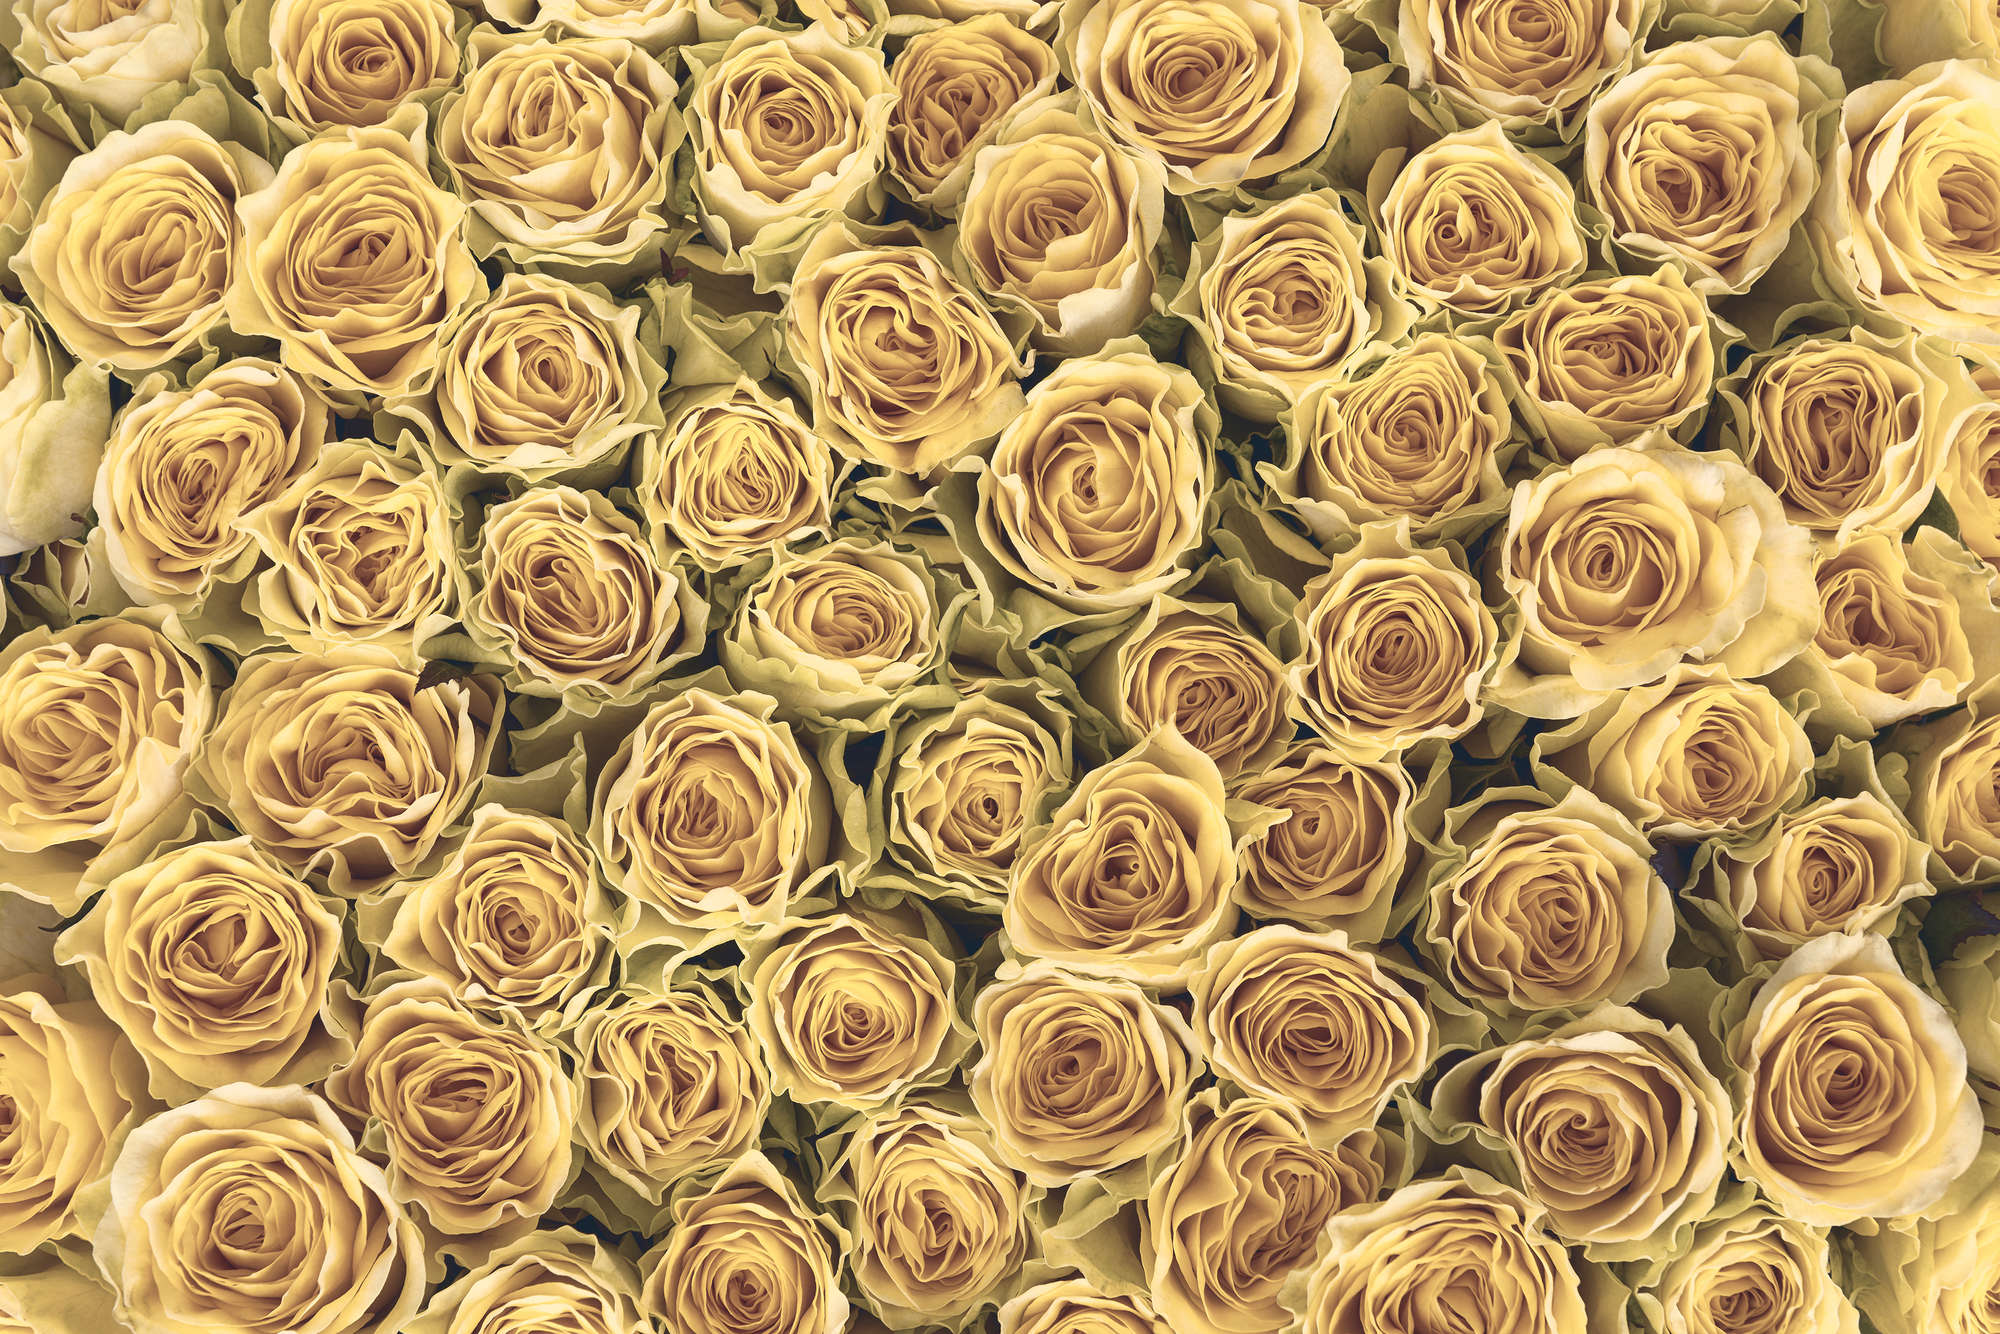             Pflanzen Fototapete goldene Rosen auf Matt Glattvlies
        